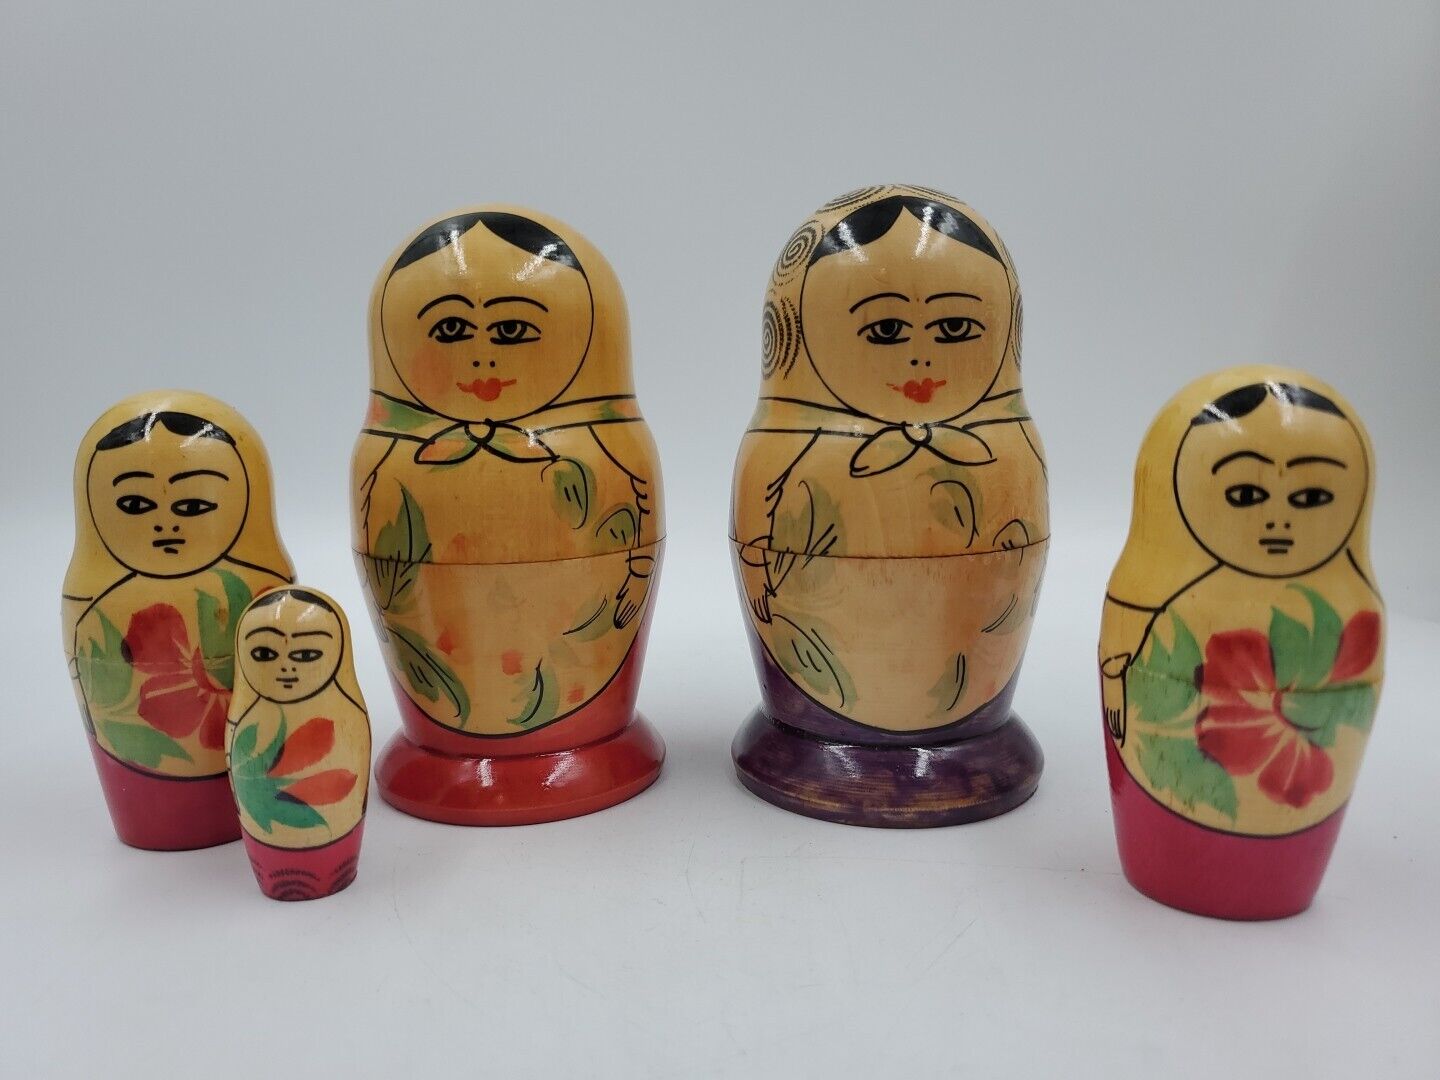 VTG Matryoshka Wooden Russian Nesting Dolls Set Of Five Made In USSR